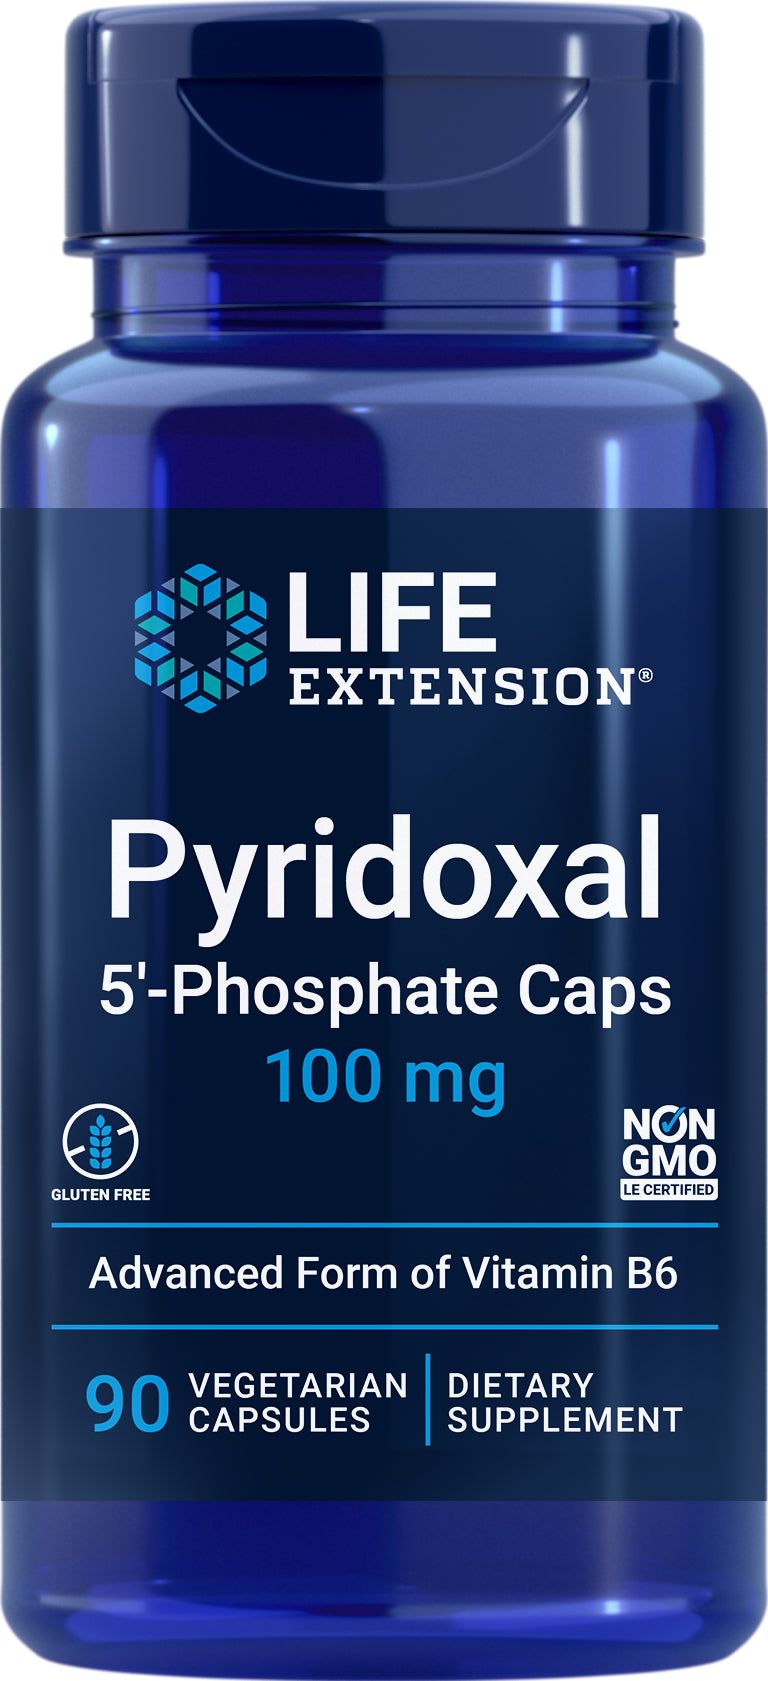 Pyridoxal 5'-Phosphate Caps 100 mg, 60 veg caps by Life Extension